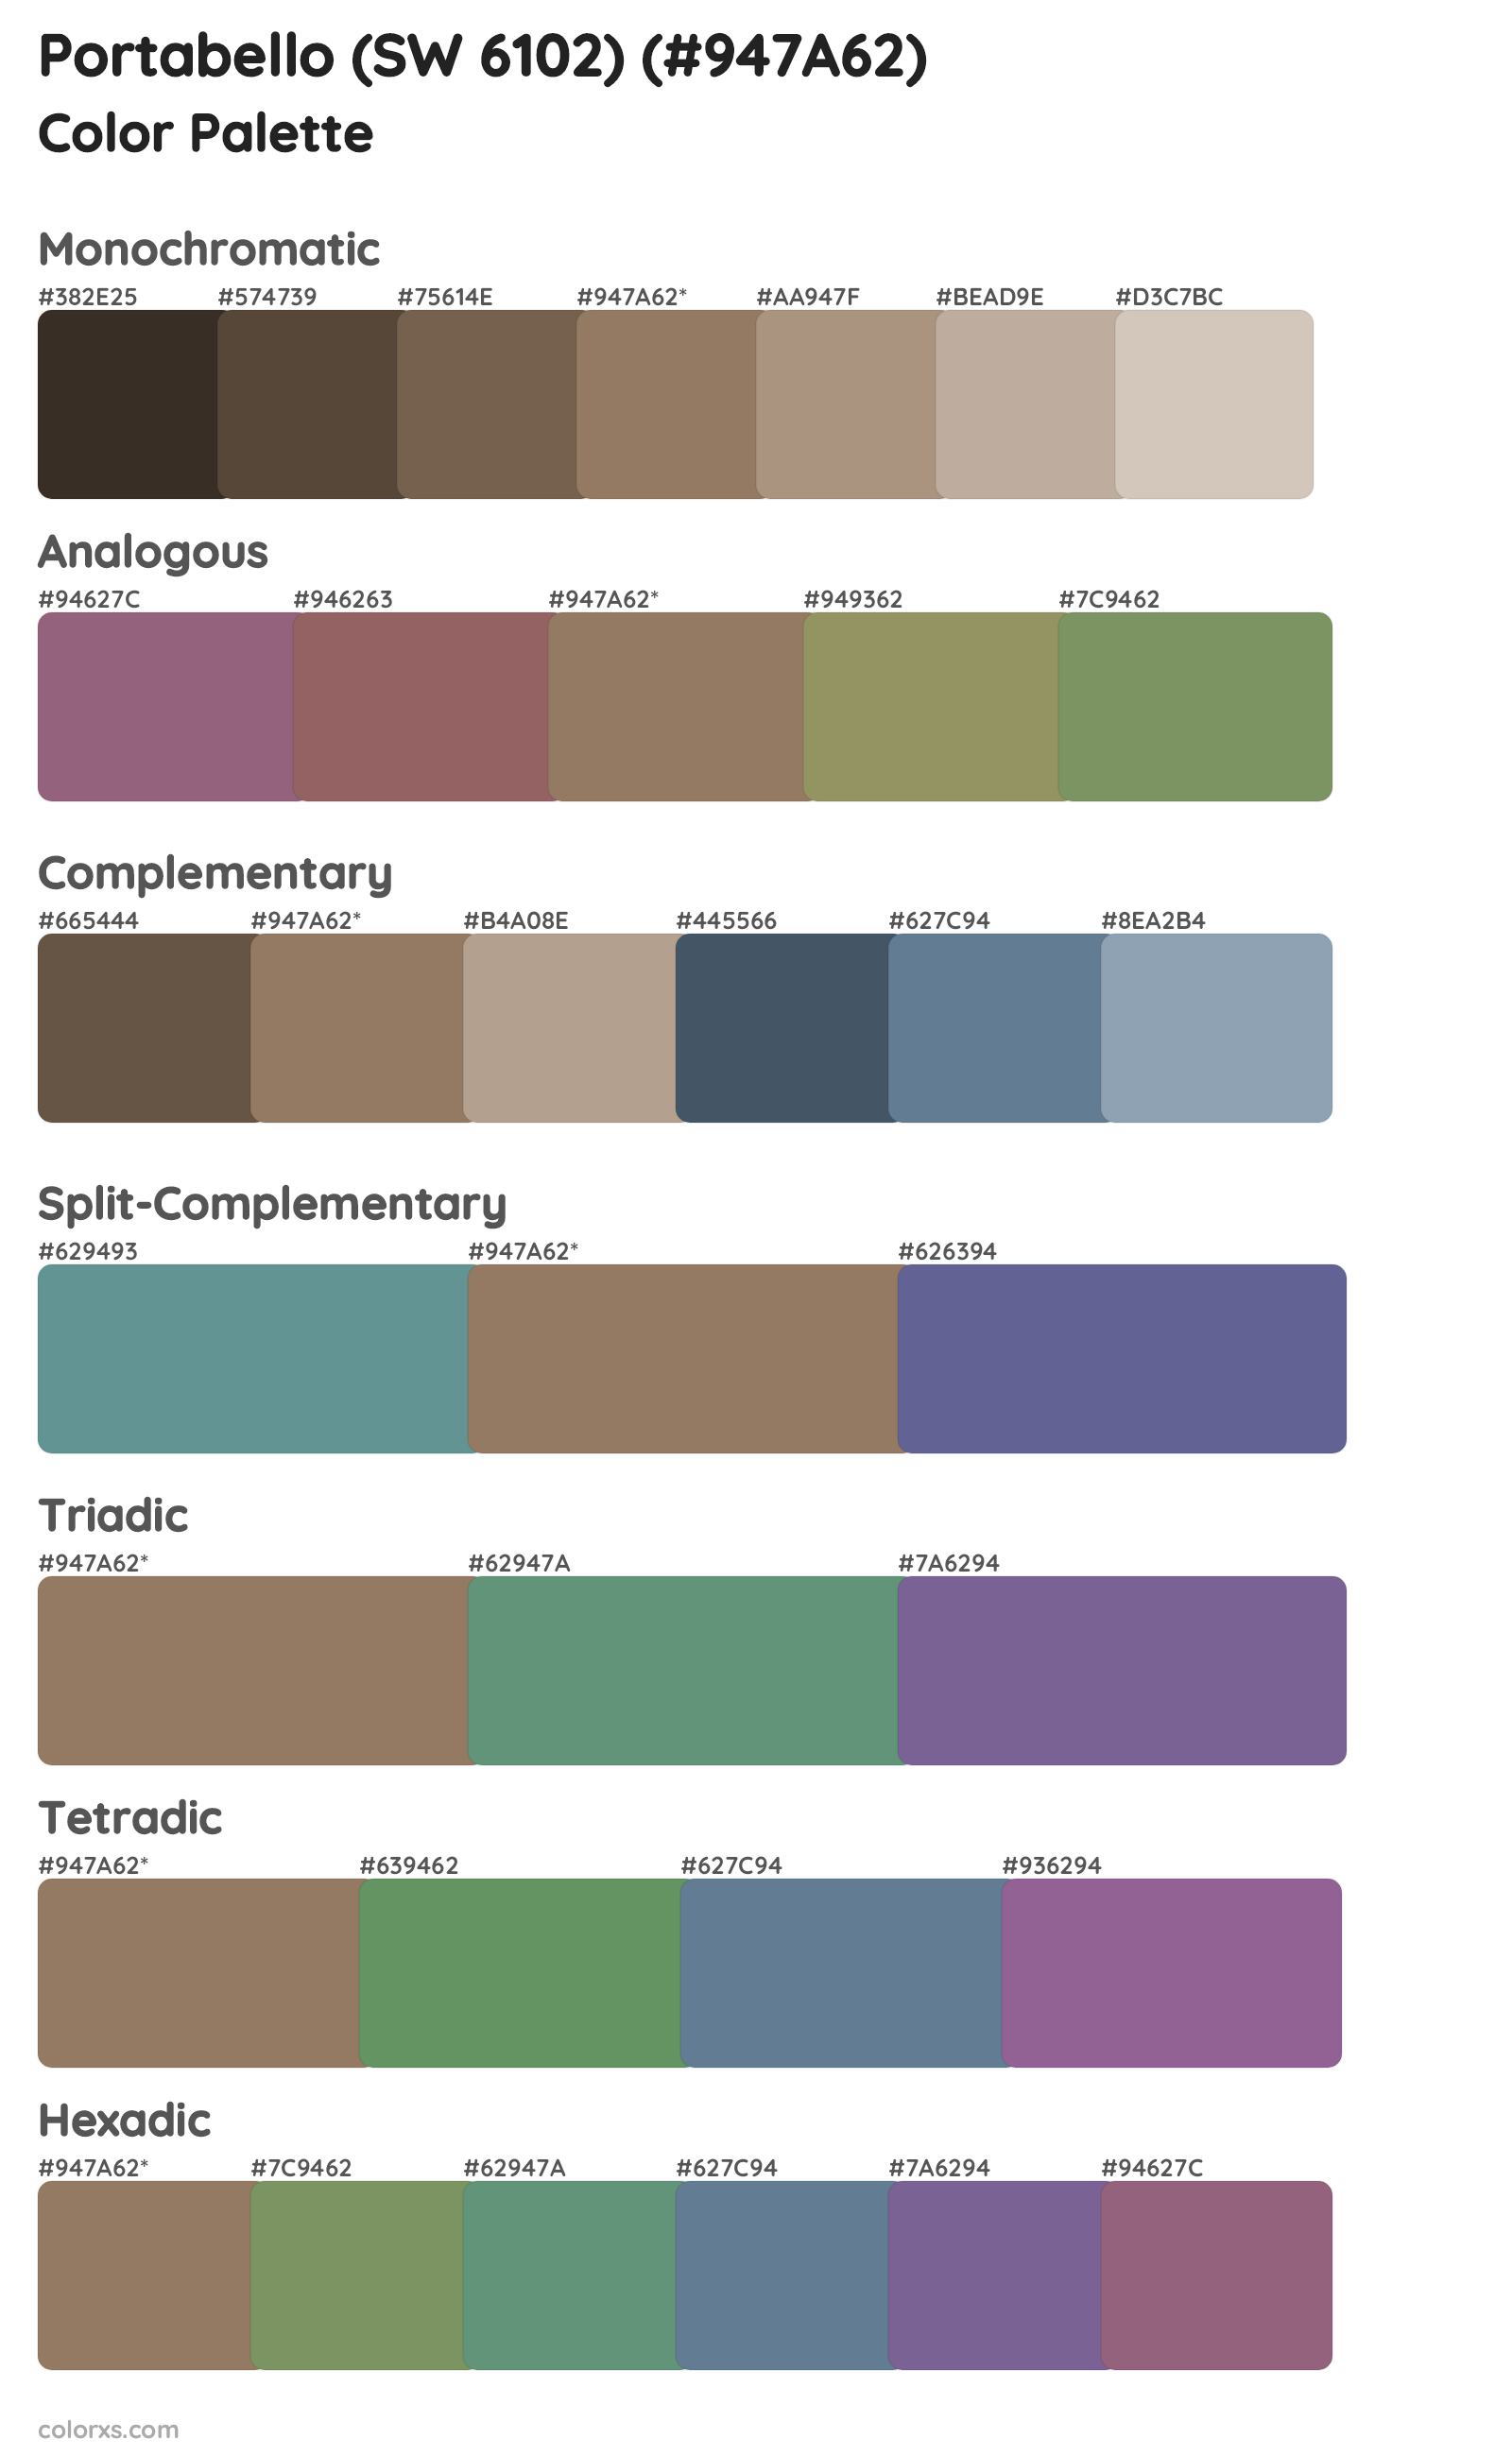 Portabello (SW 6102) Color Scheme Palettes